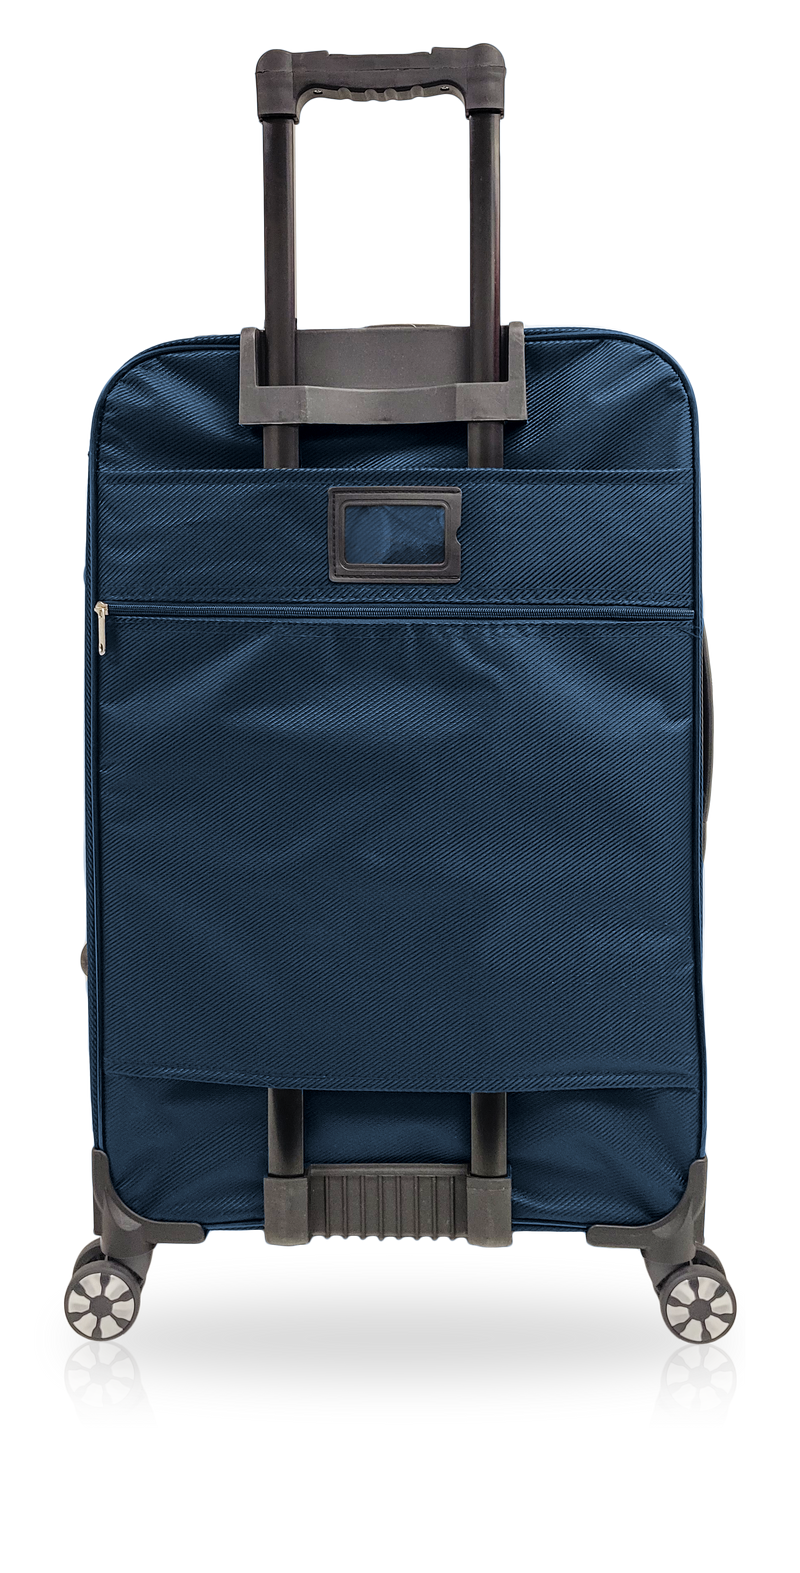 TOSCANO Aiutante 23-inch Lightweight Luggage Suitcase